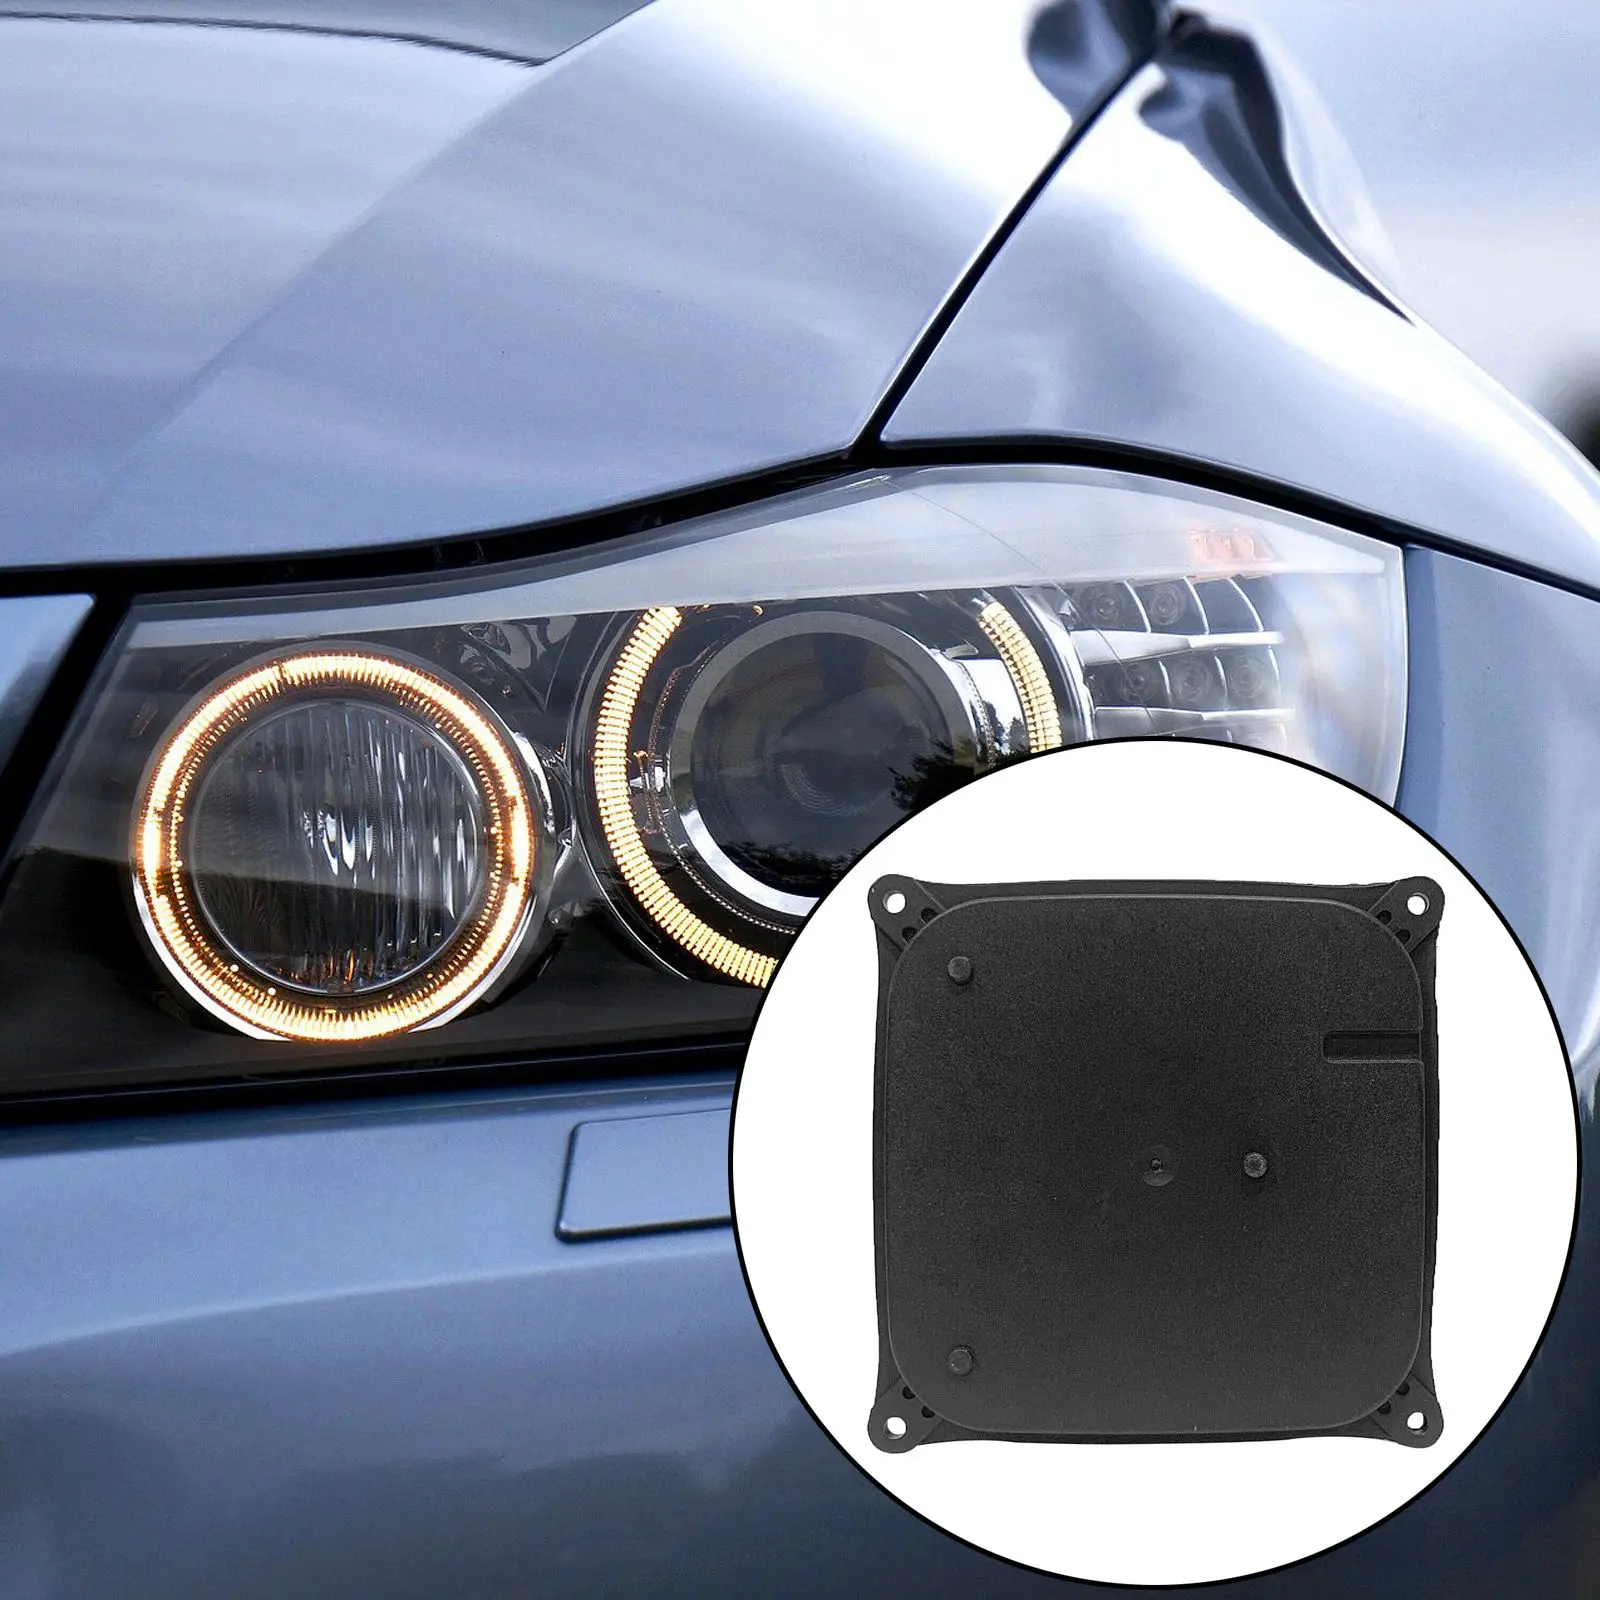 Xenon LED Headlight Ballast Control Unit Fits for W204 Car Replace Acc